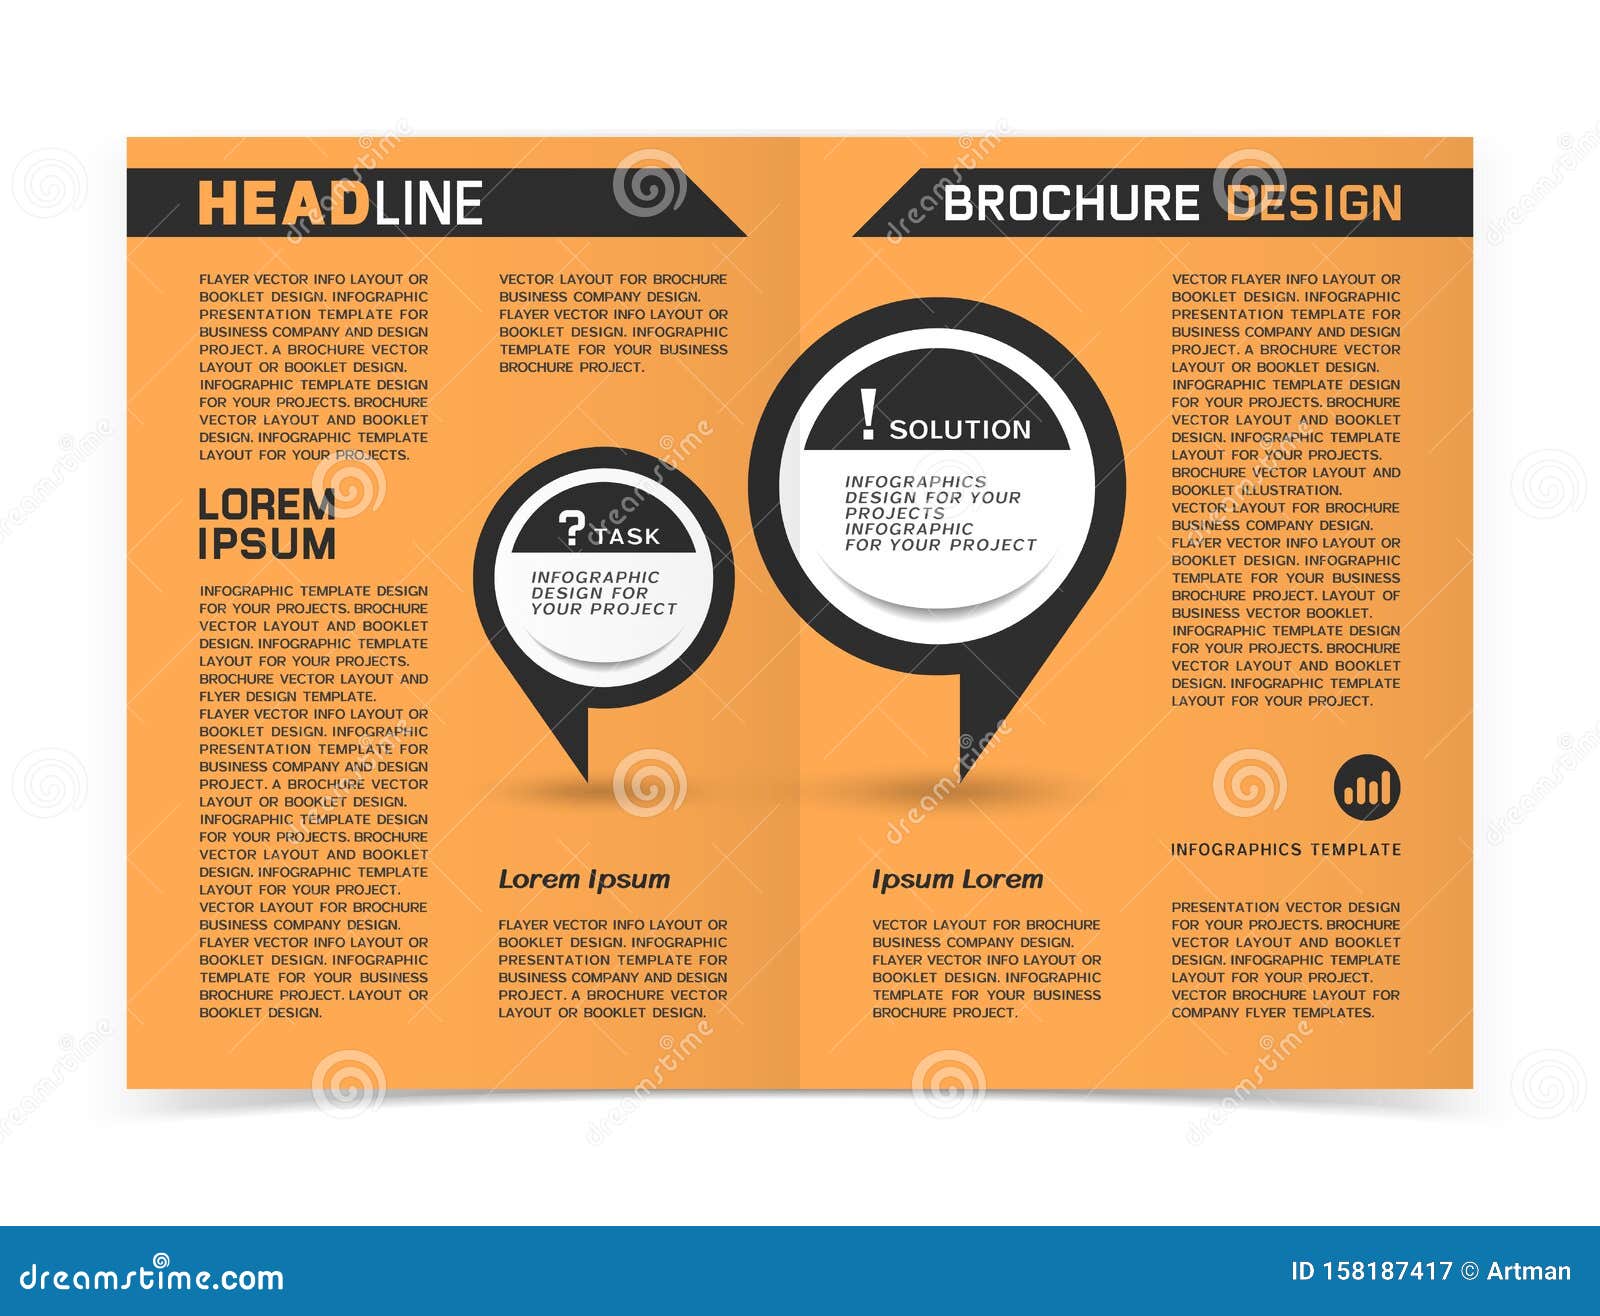 Download Business Brochure Or Web Banner Design Stock Vector Illustration Of Paper Design 158187417 Yellowimages Mockups